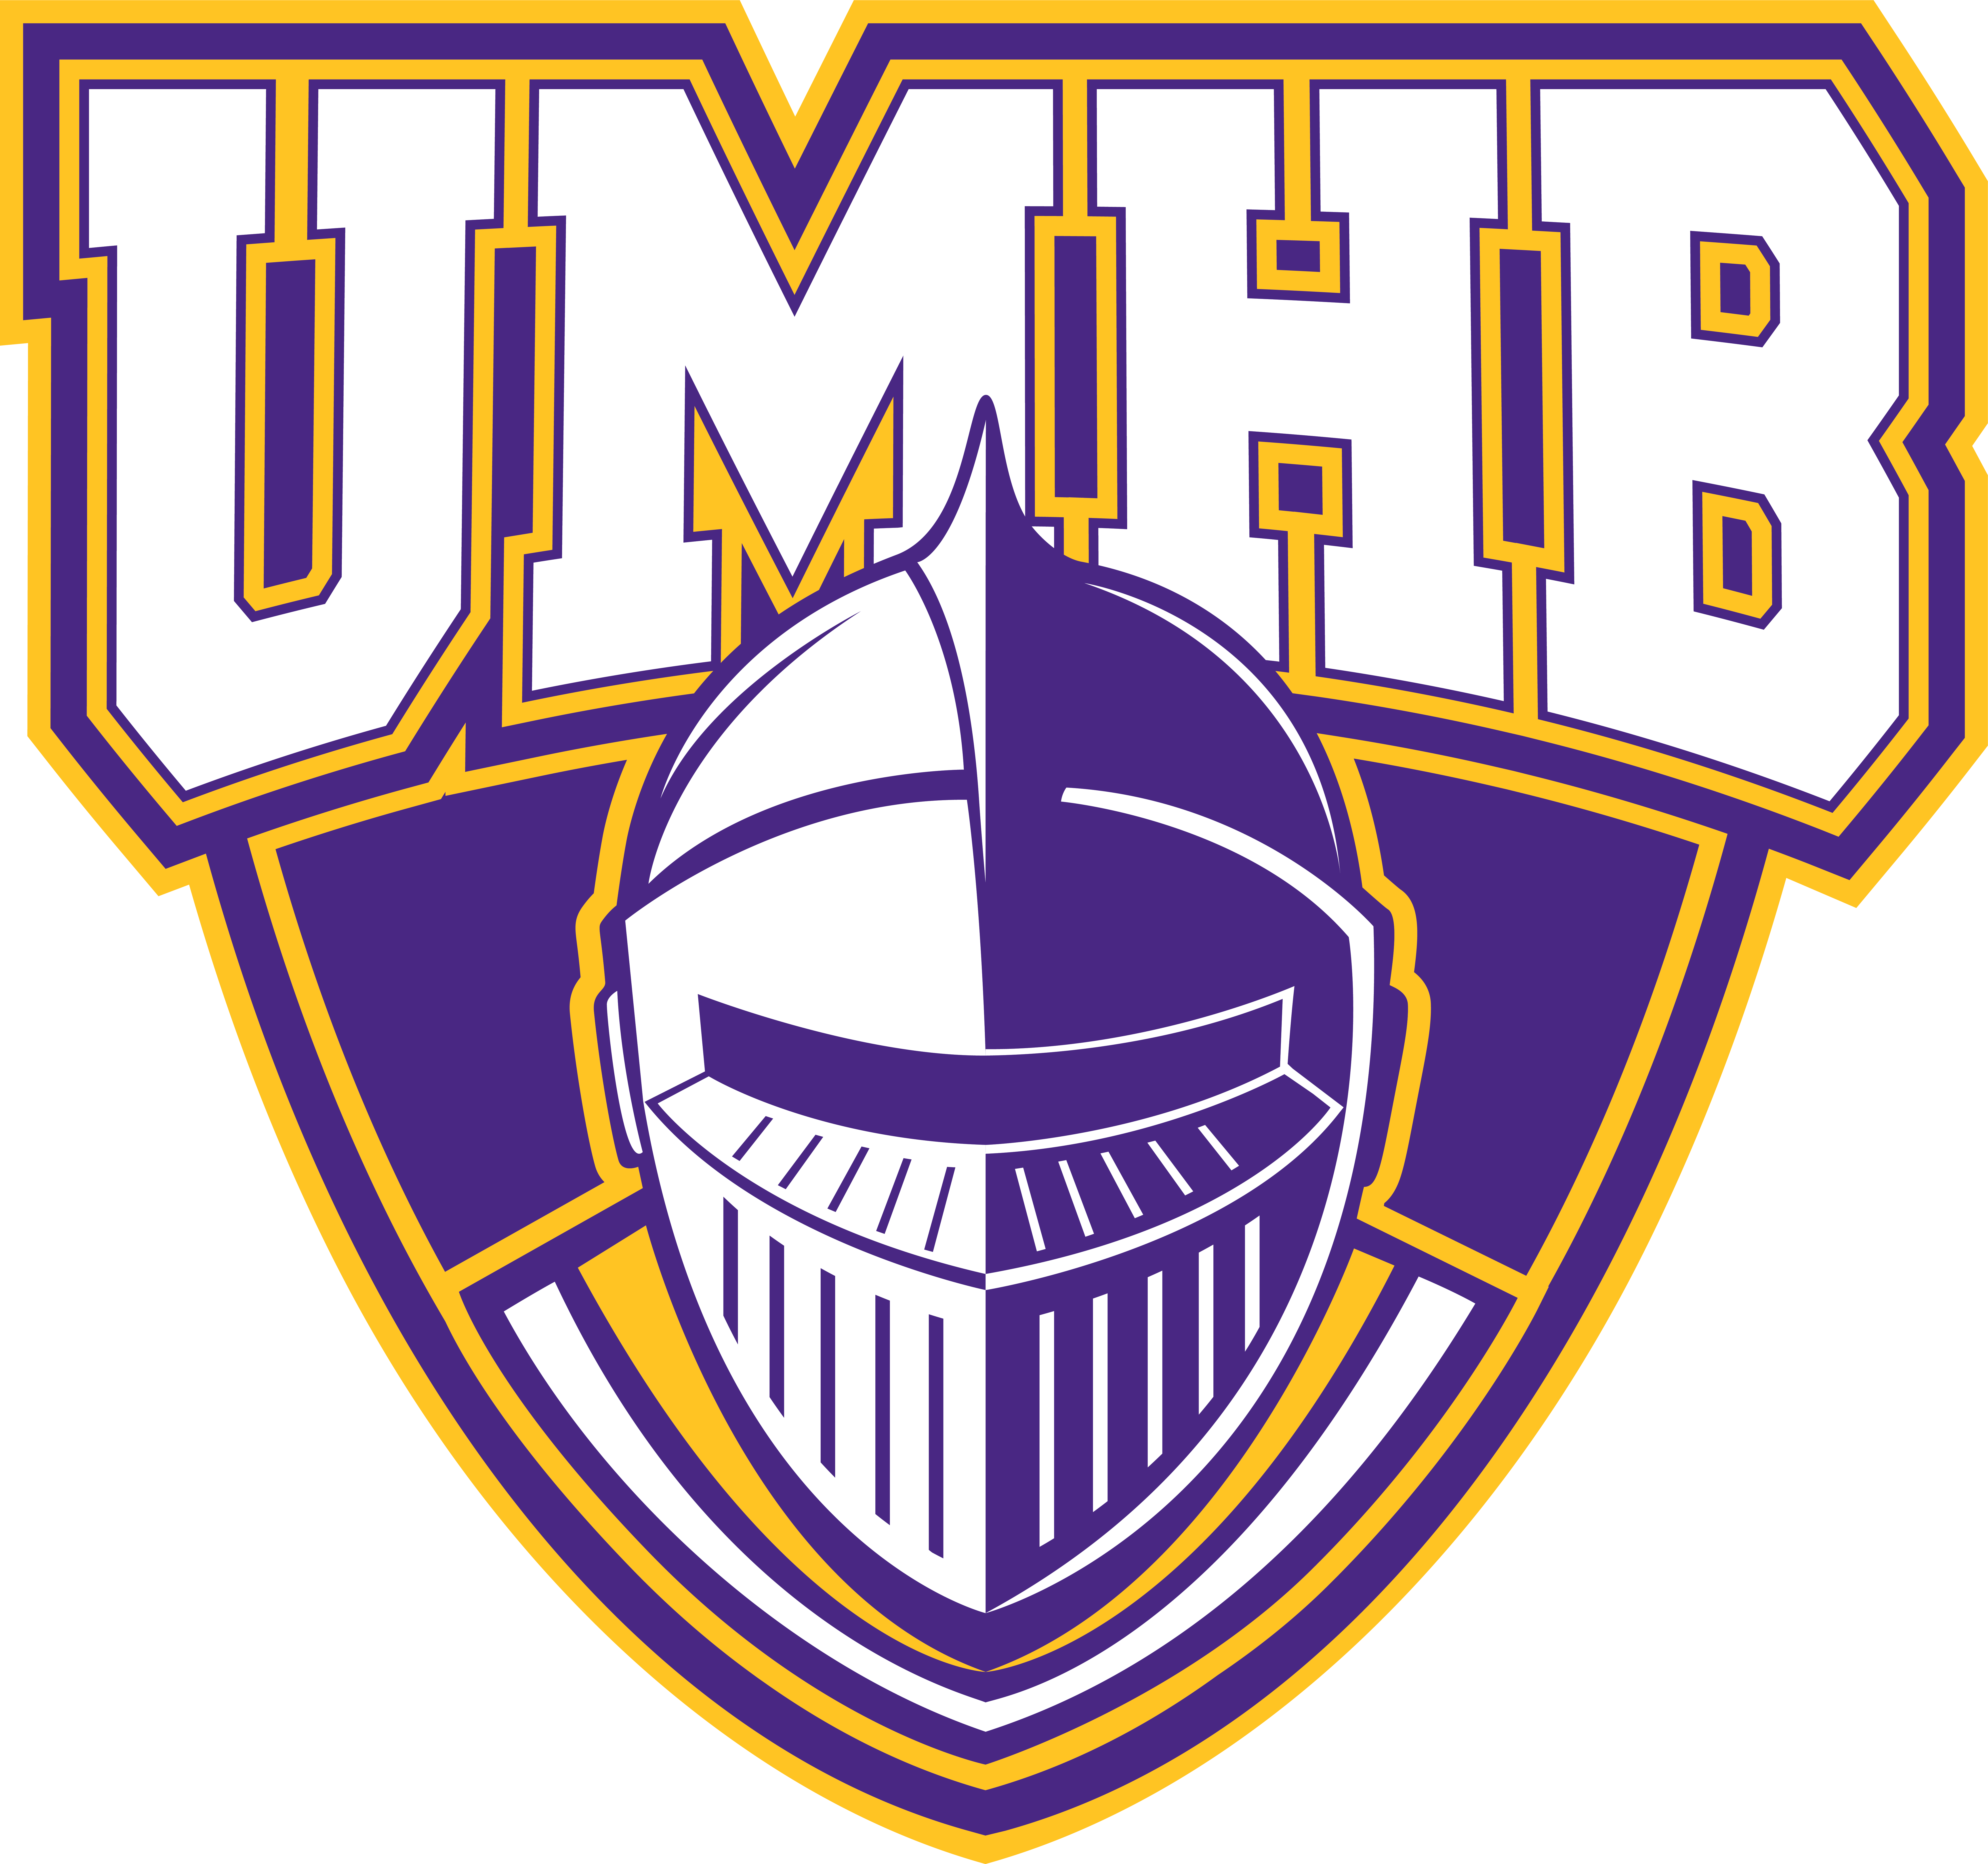 UMHB Athetic logo - color - gold